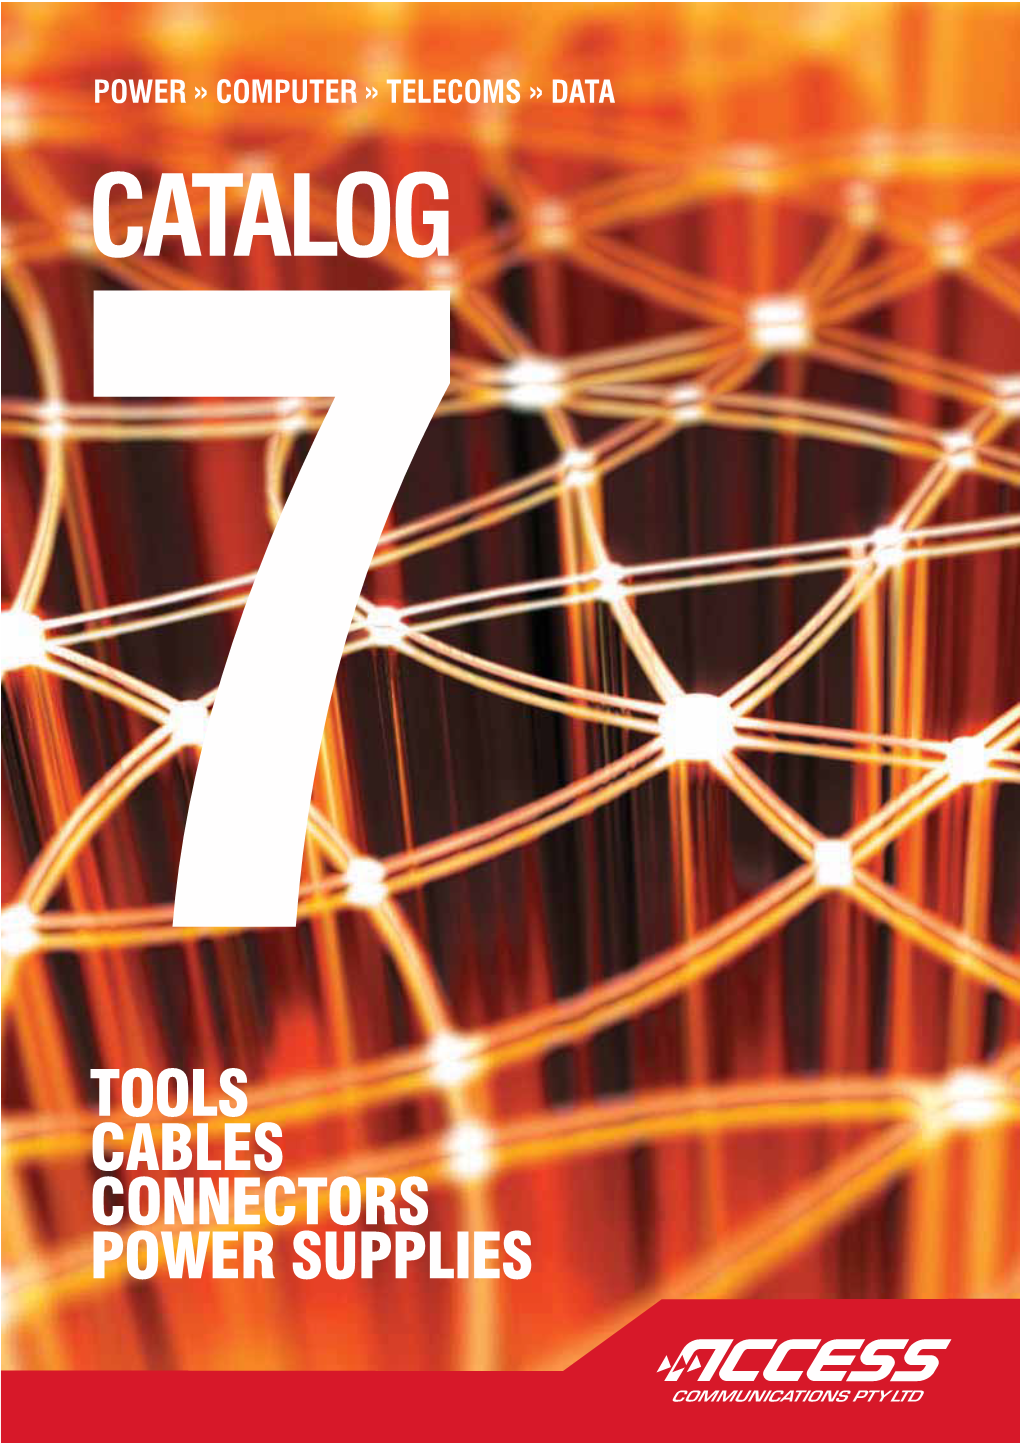 Tools Cables Connectors Power Supplies